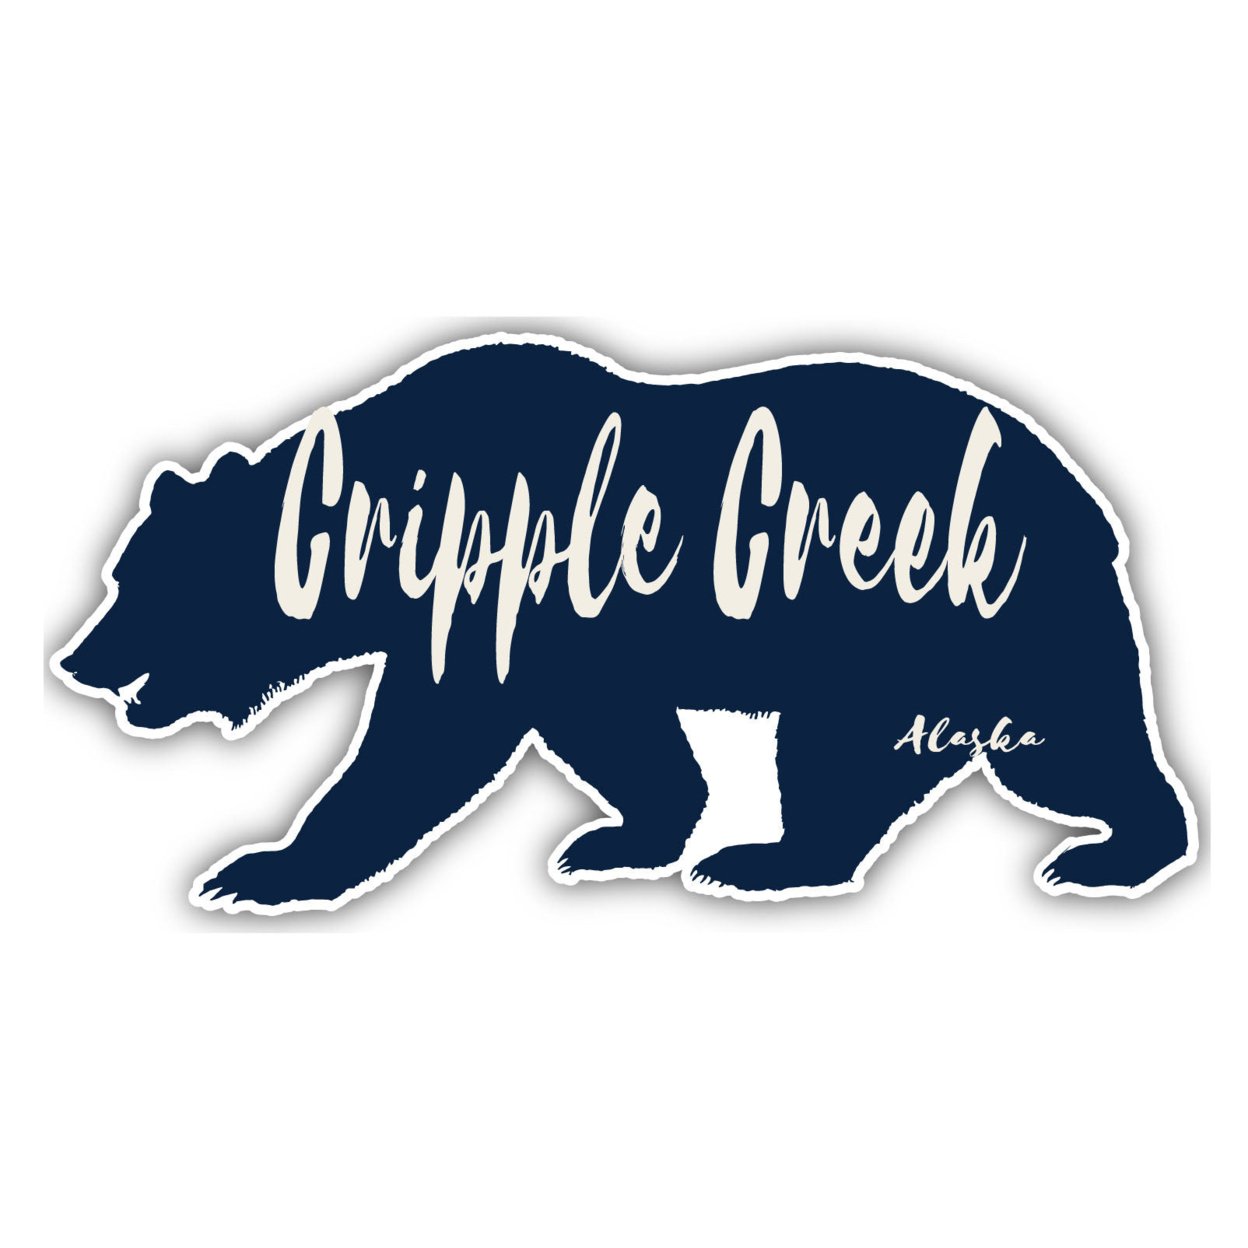 Cripple Creek Alaska Souvenir Decorative Stickers (Choose Theme And Size) - Single Unit, 4-Inch, Bear